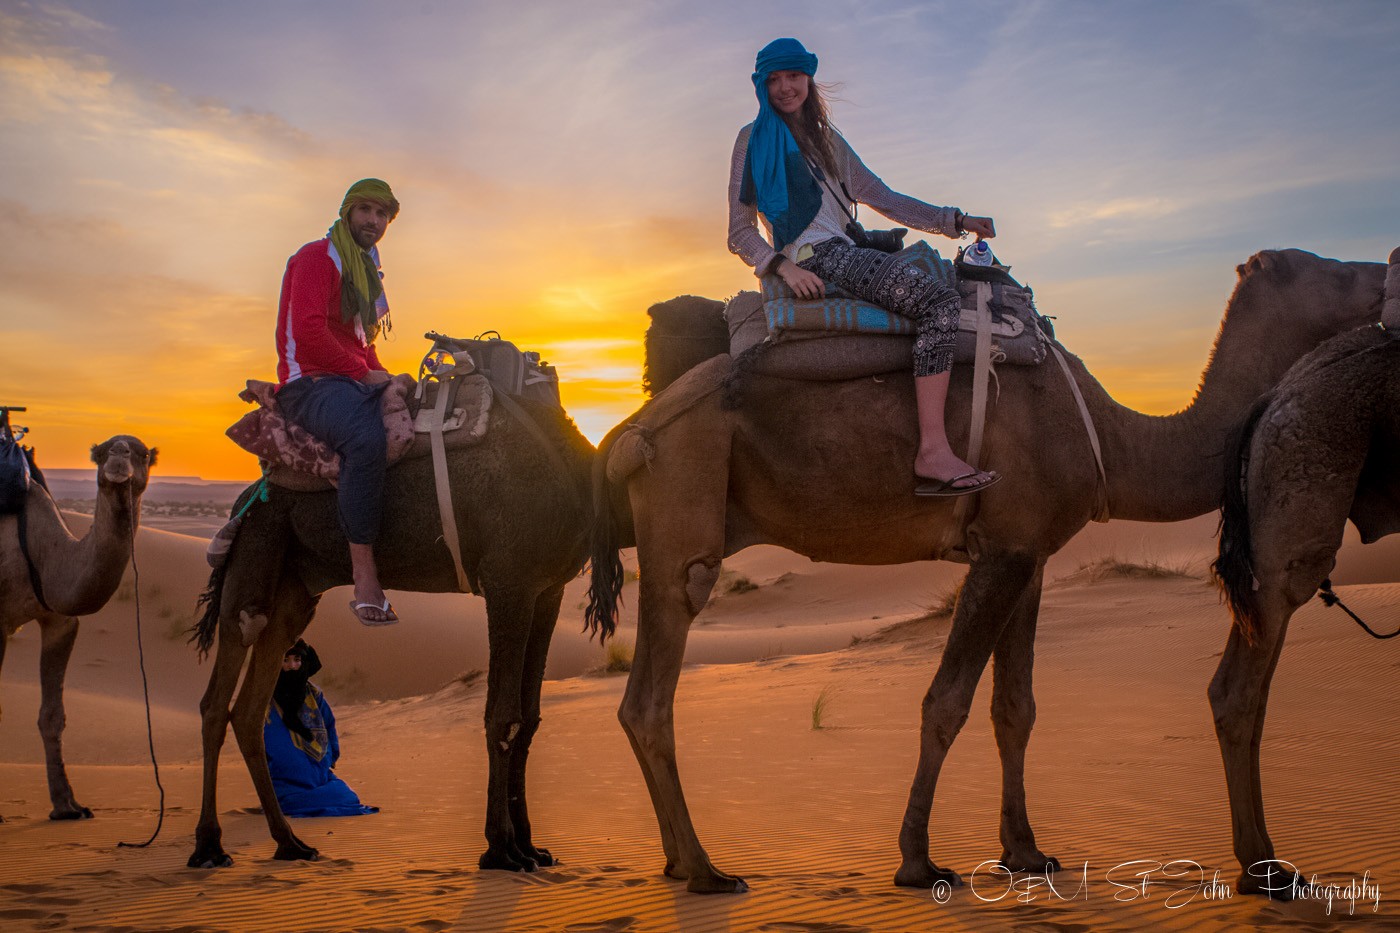 Max and Oksana in Erg Chebbi, Sahara Desert. Morocco